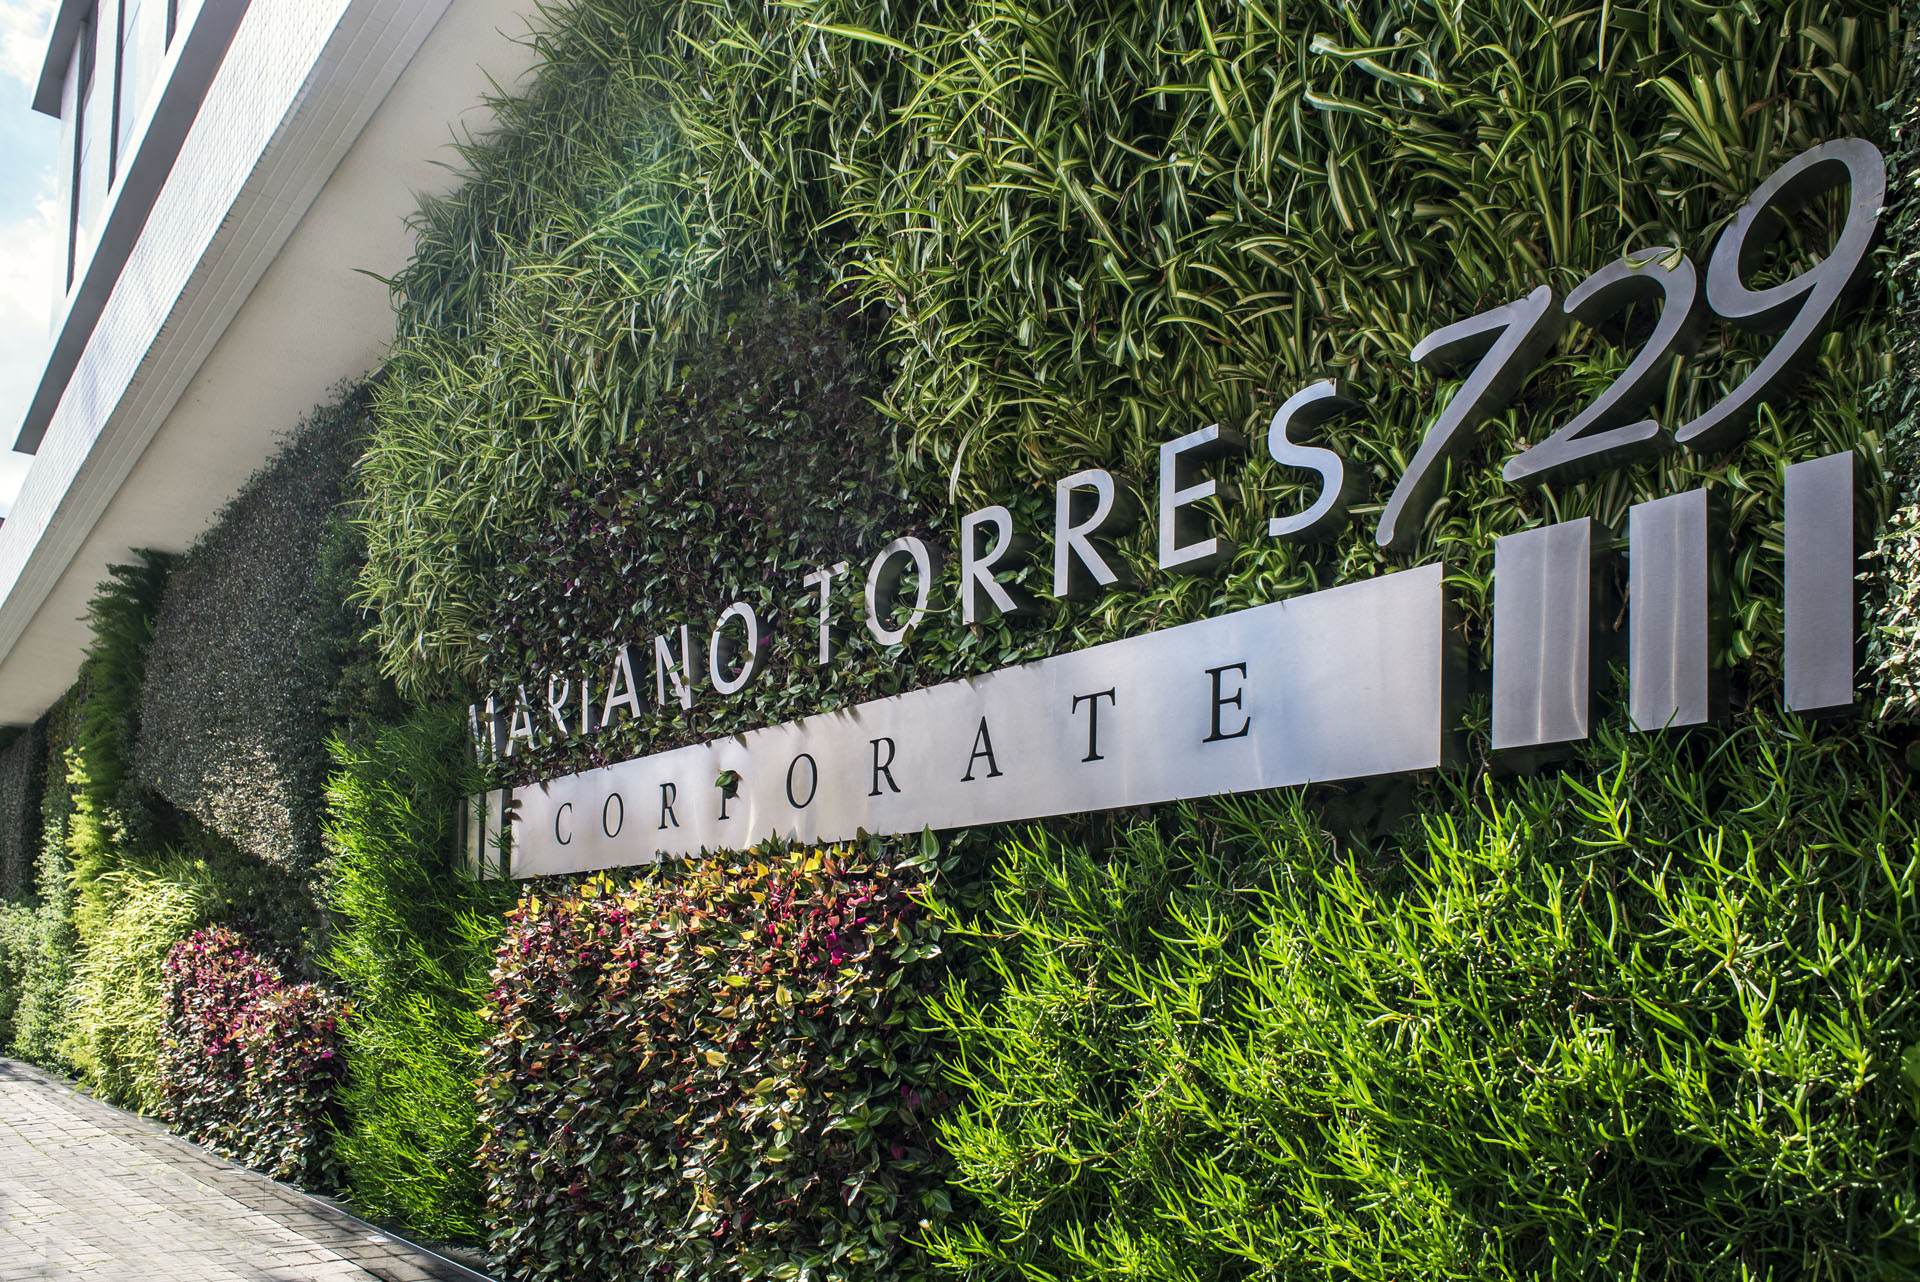 Mariano Torres 729 Corporate 